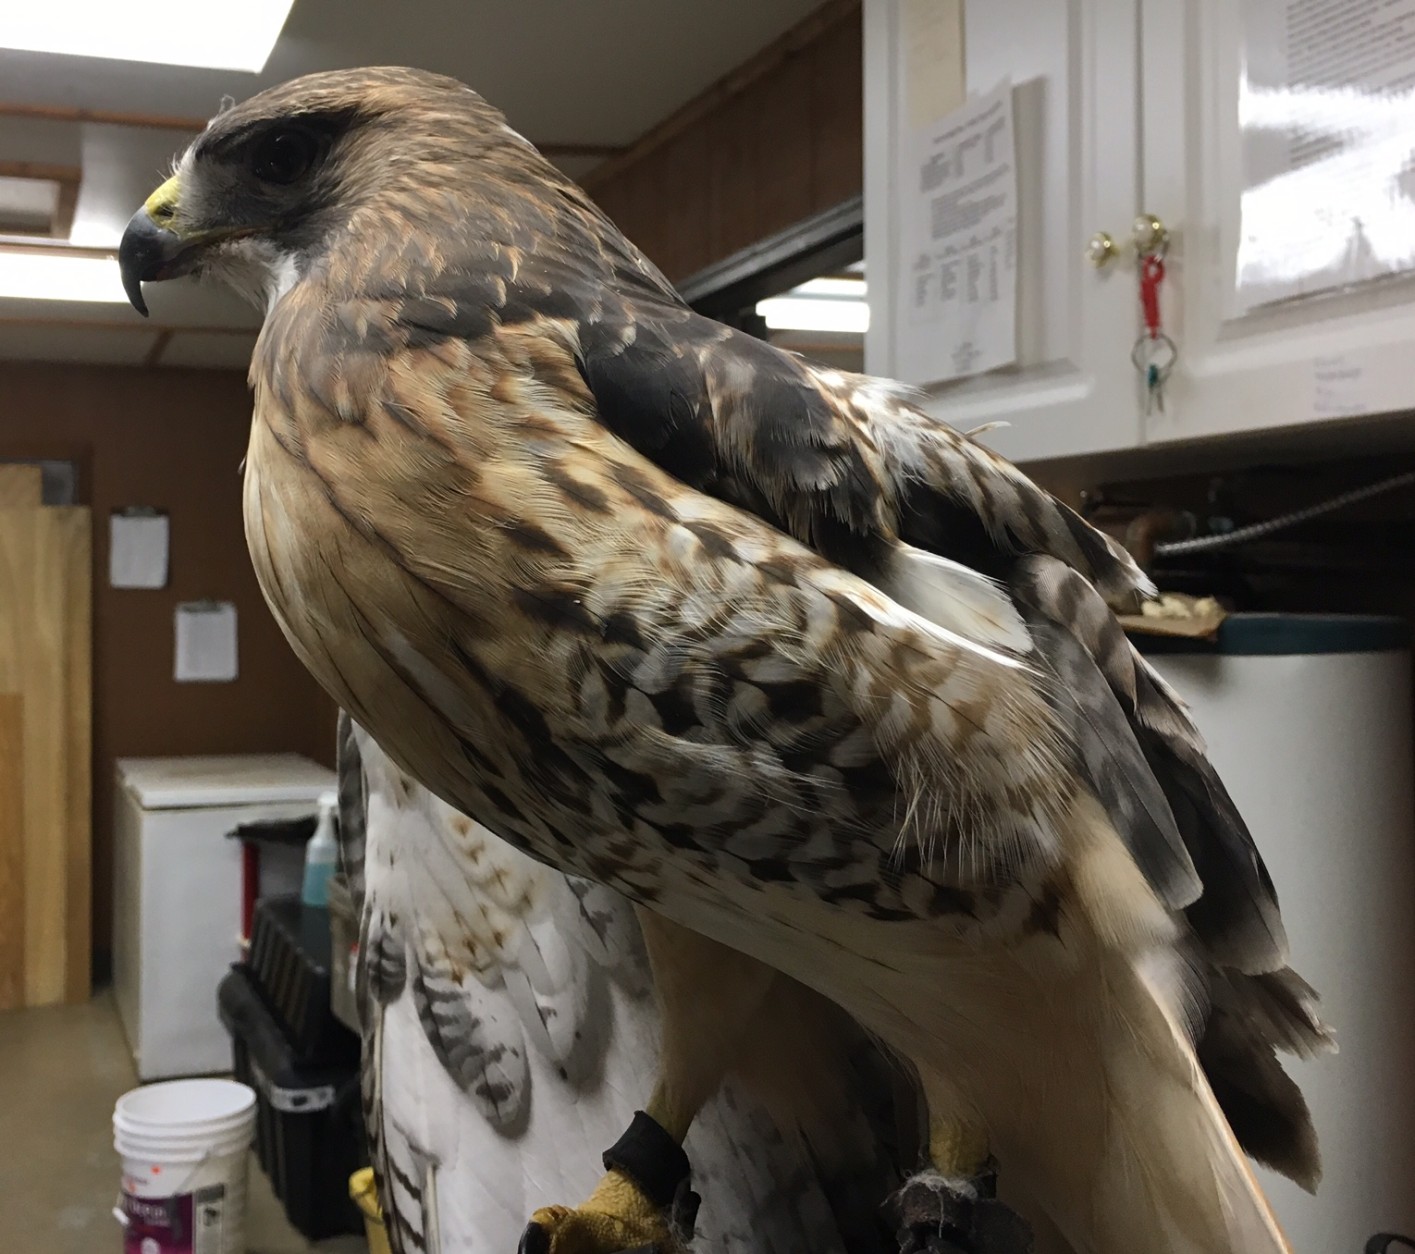 Uno, the read-tailed hawk. (WTOP/Kate Ryan)